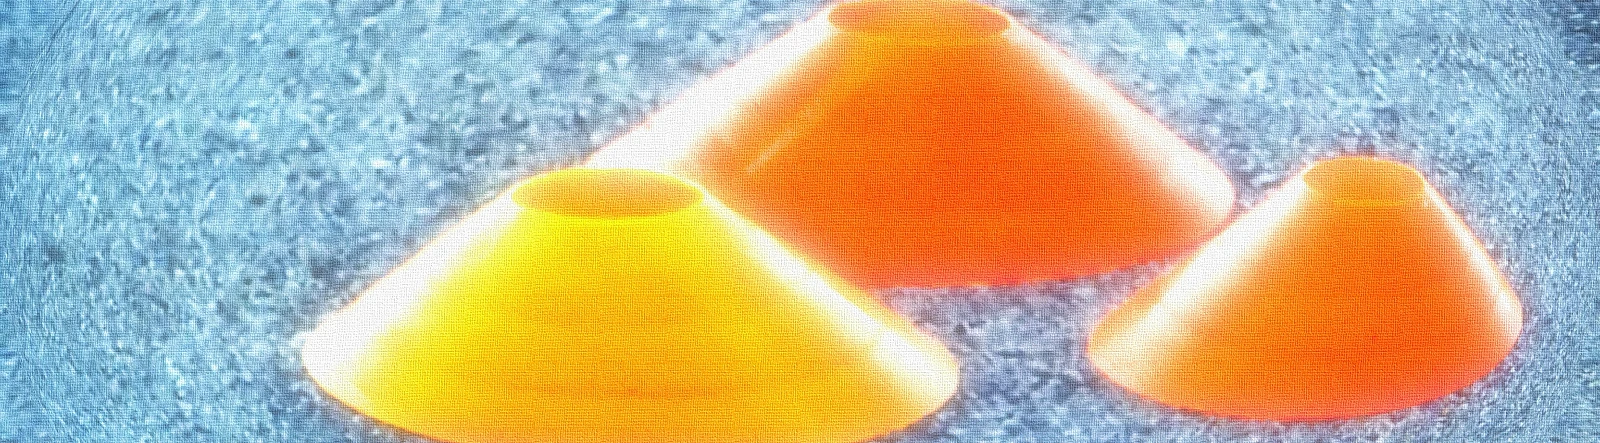 Three glowing orange flexi cones on a blue background